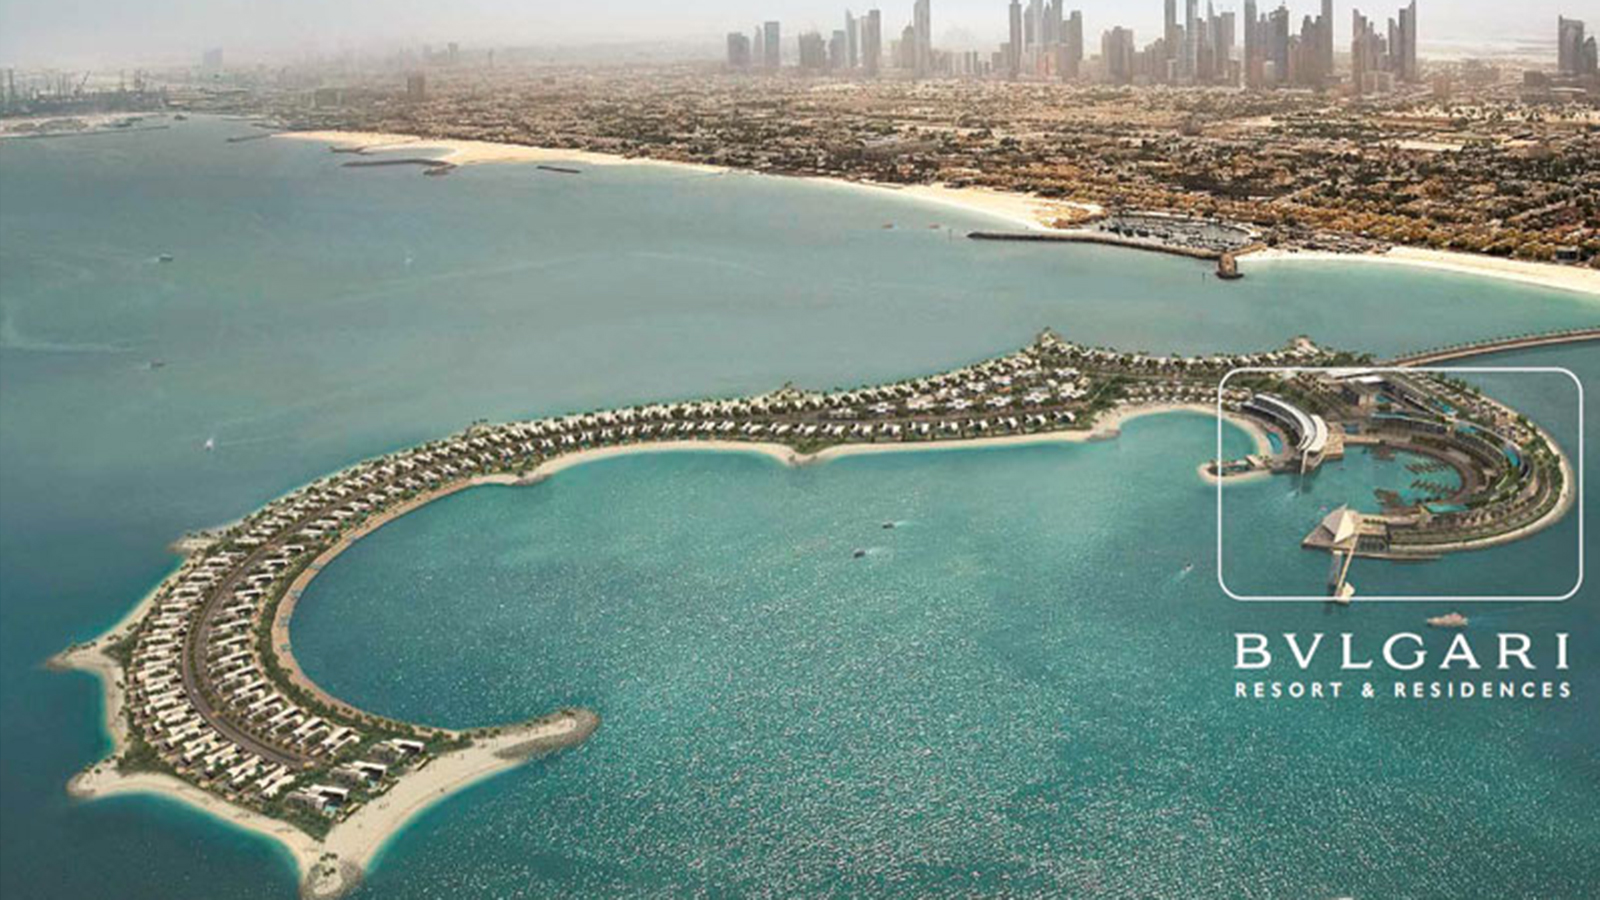 Bulgari luxury resort in Dubai to include marina and yacht club